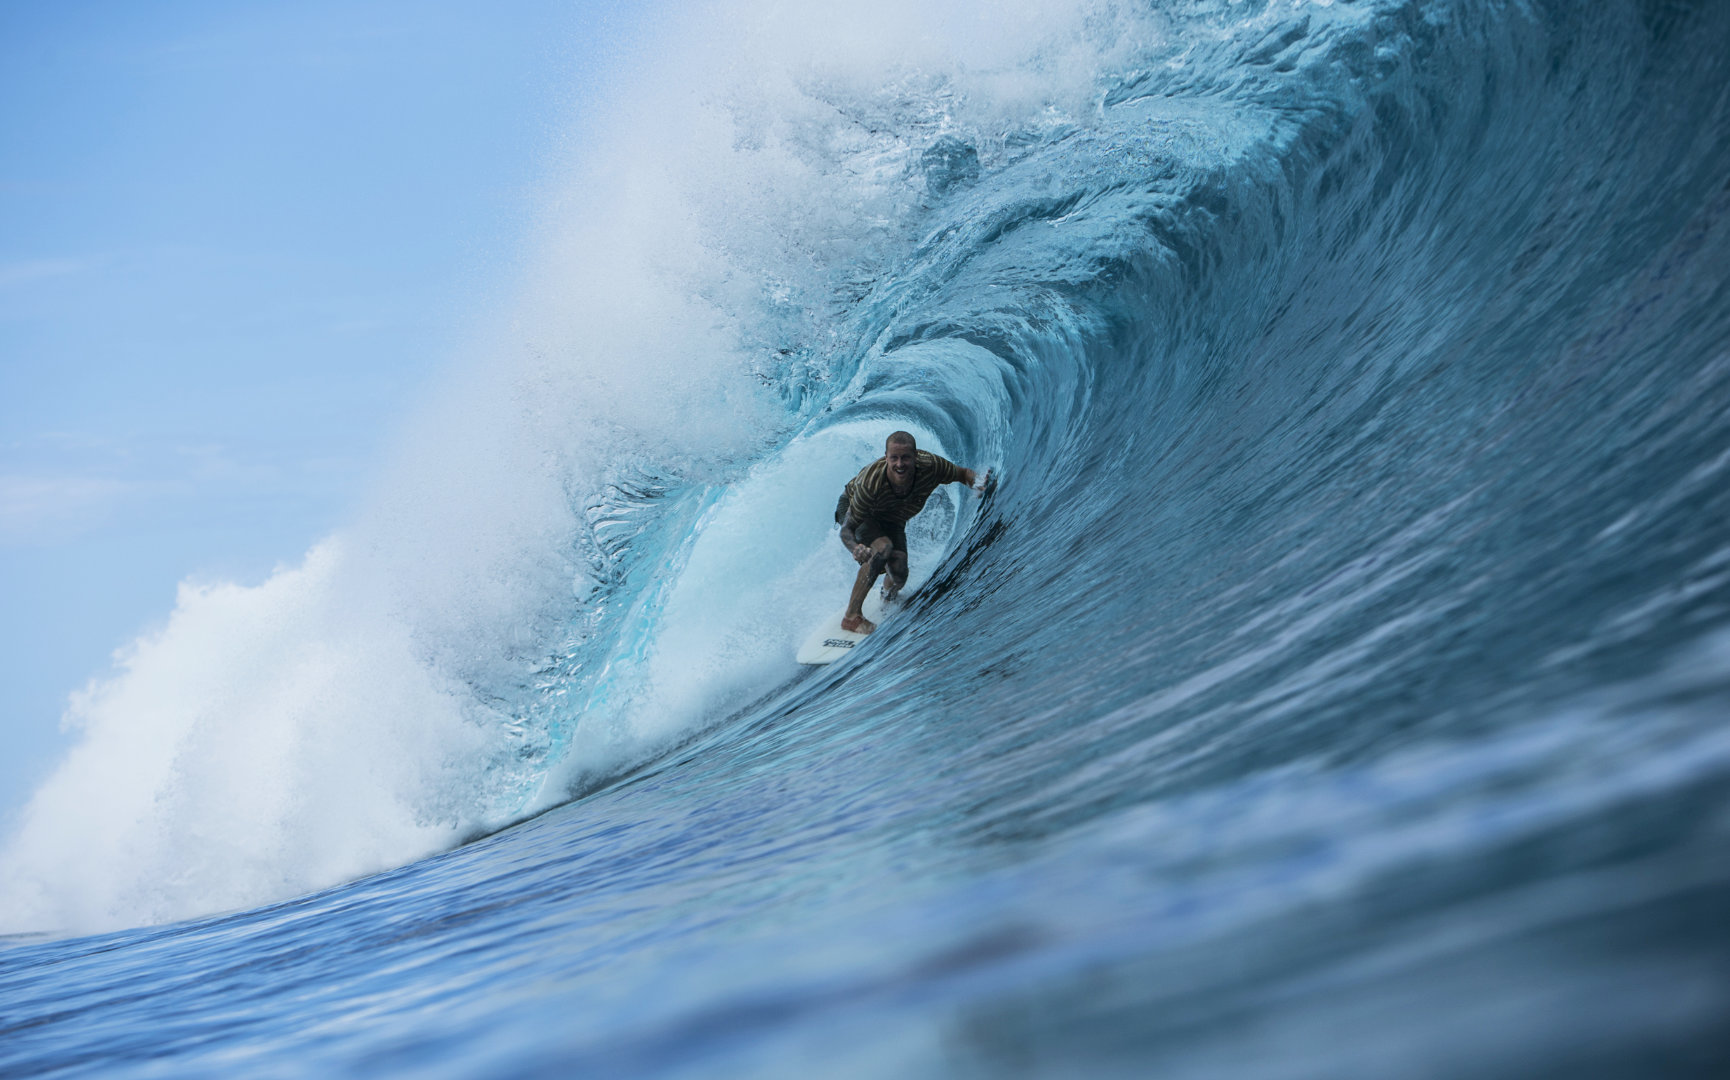 sumatra surf trip